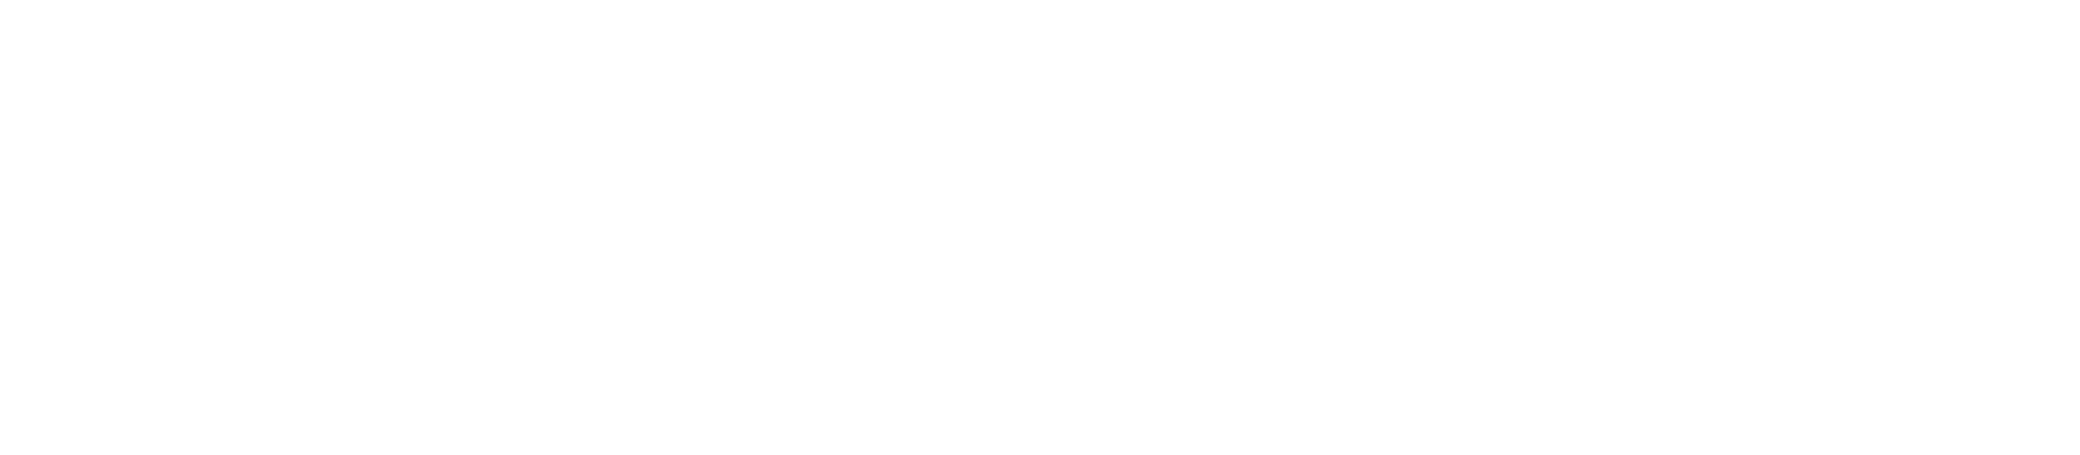 Neumora Logo